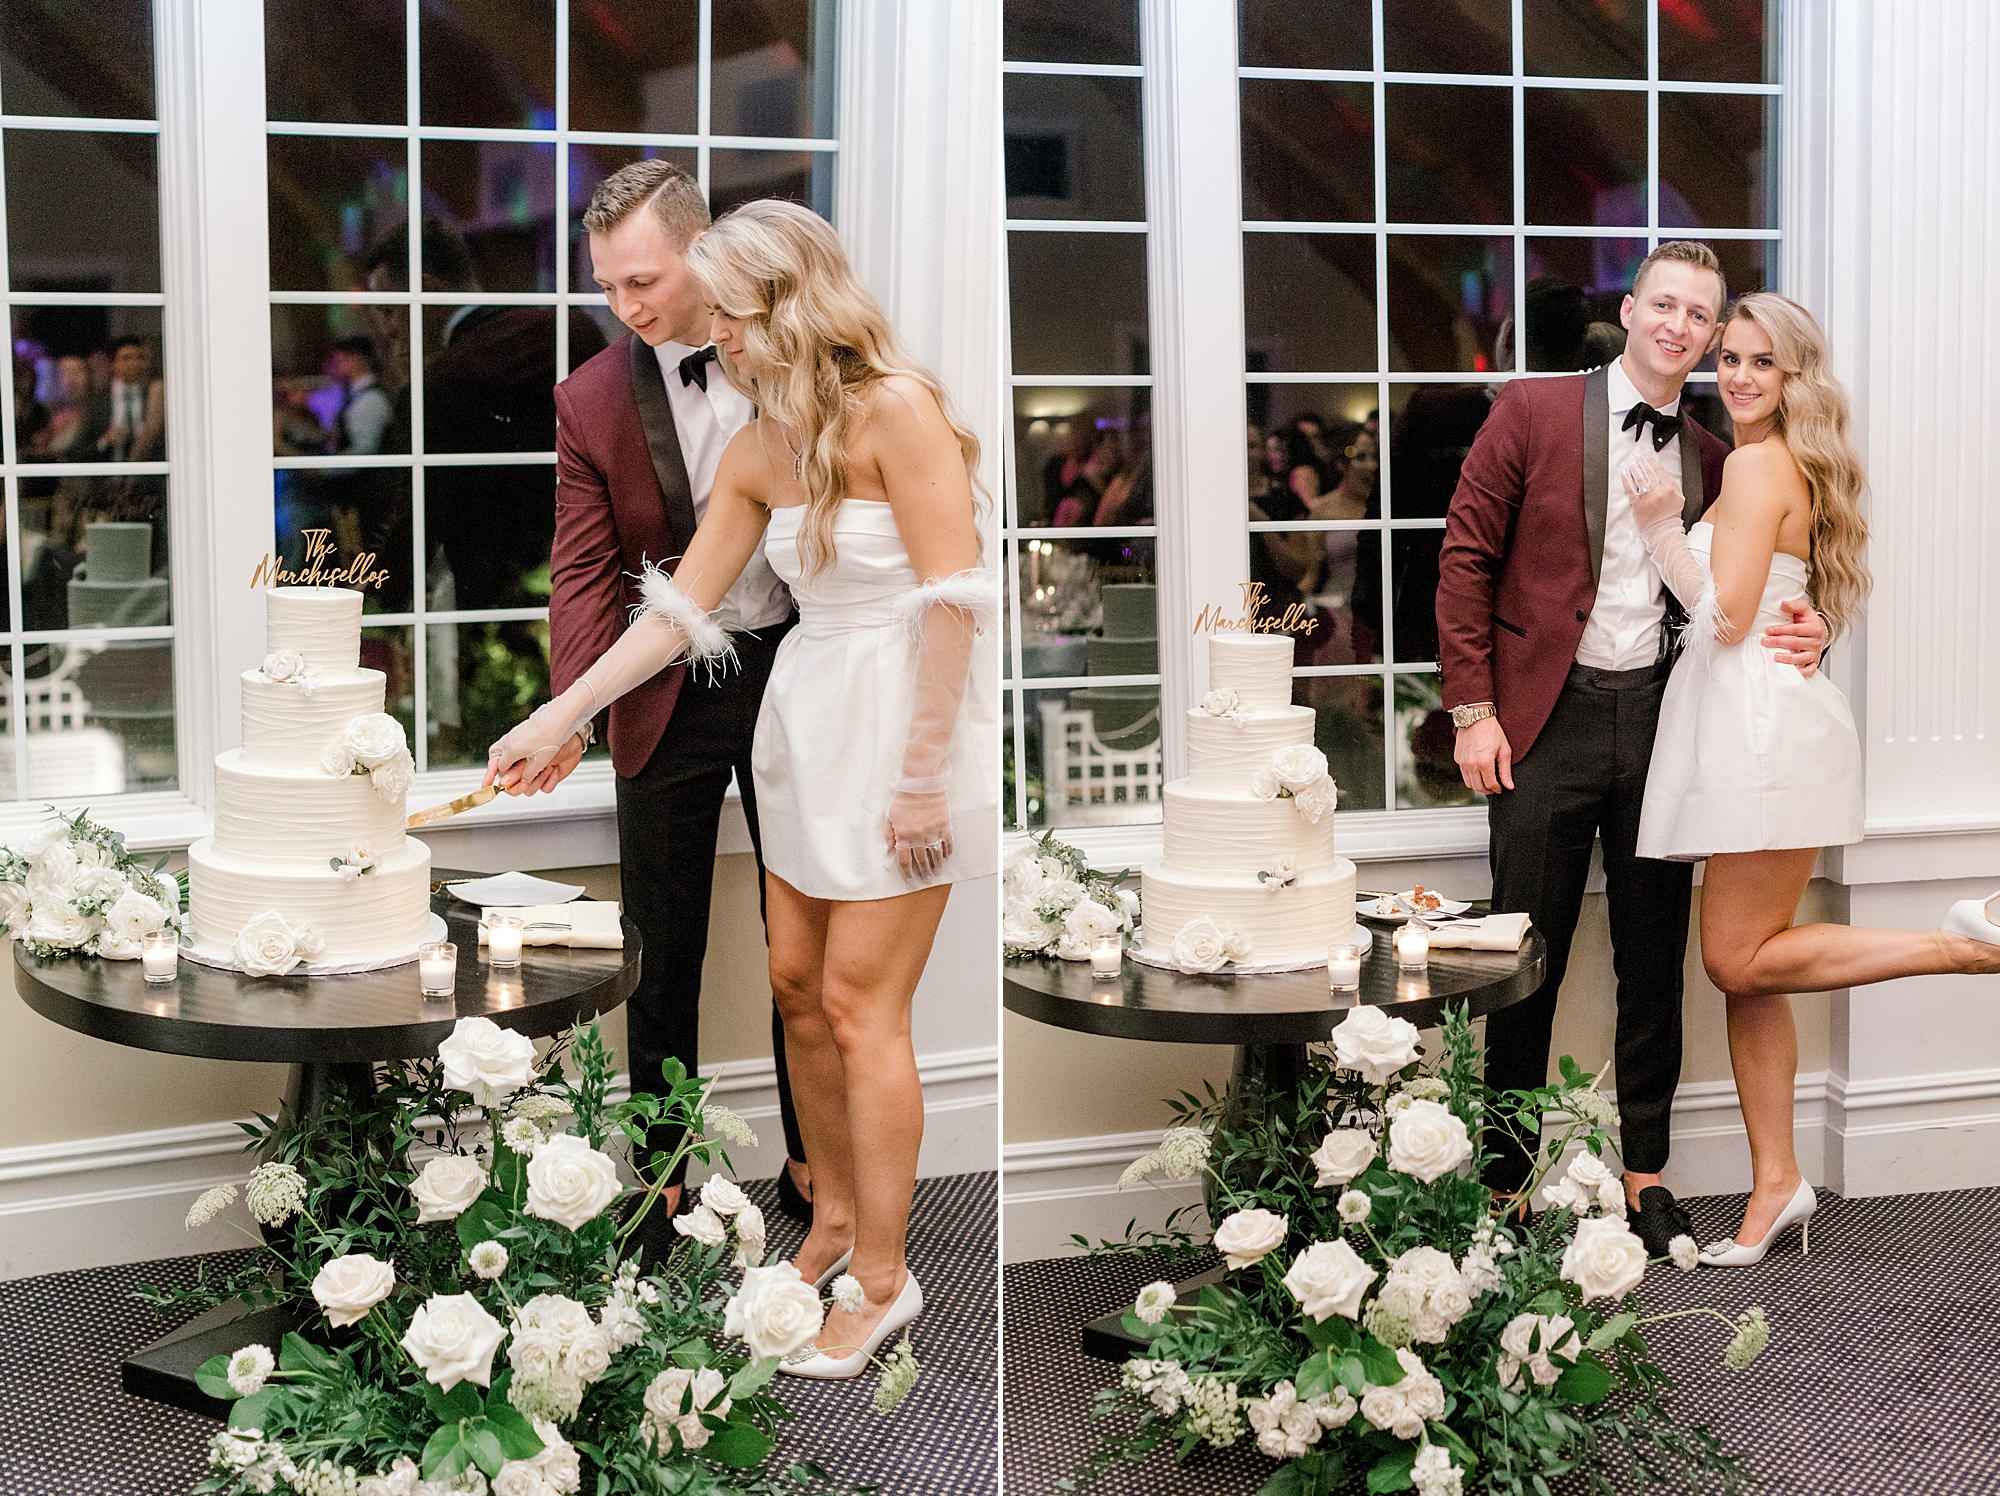 bride and groom cut wedding cake together during Long Beach Island wedding reception